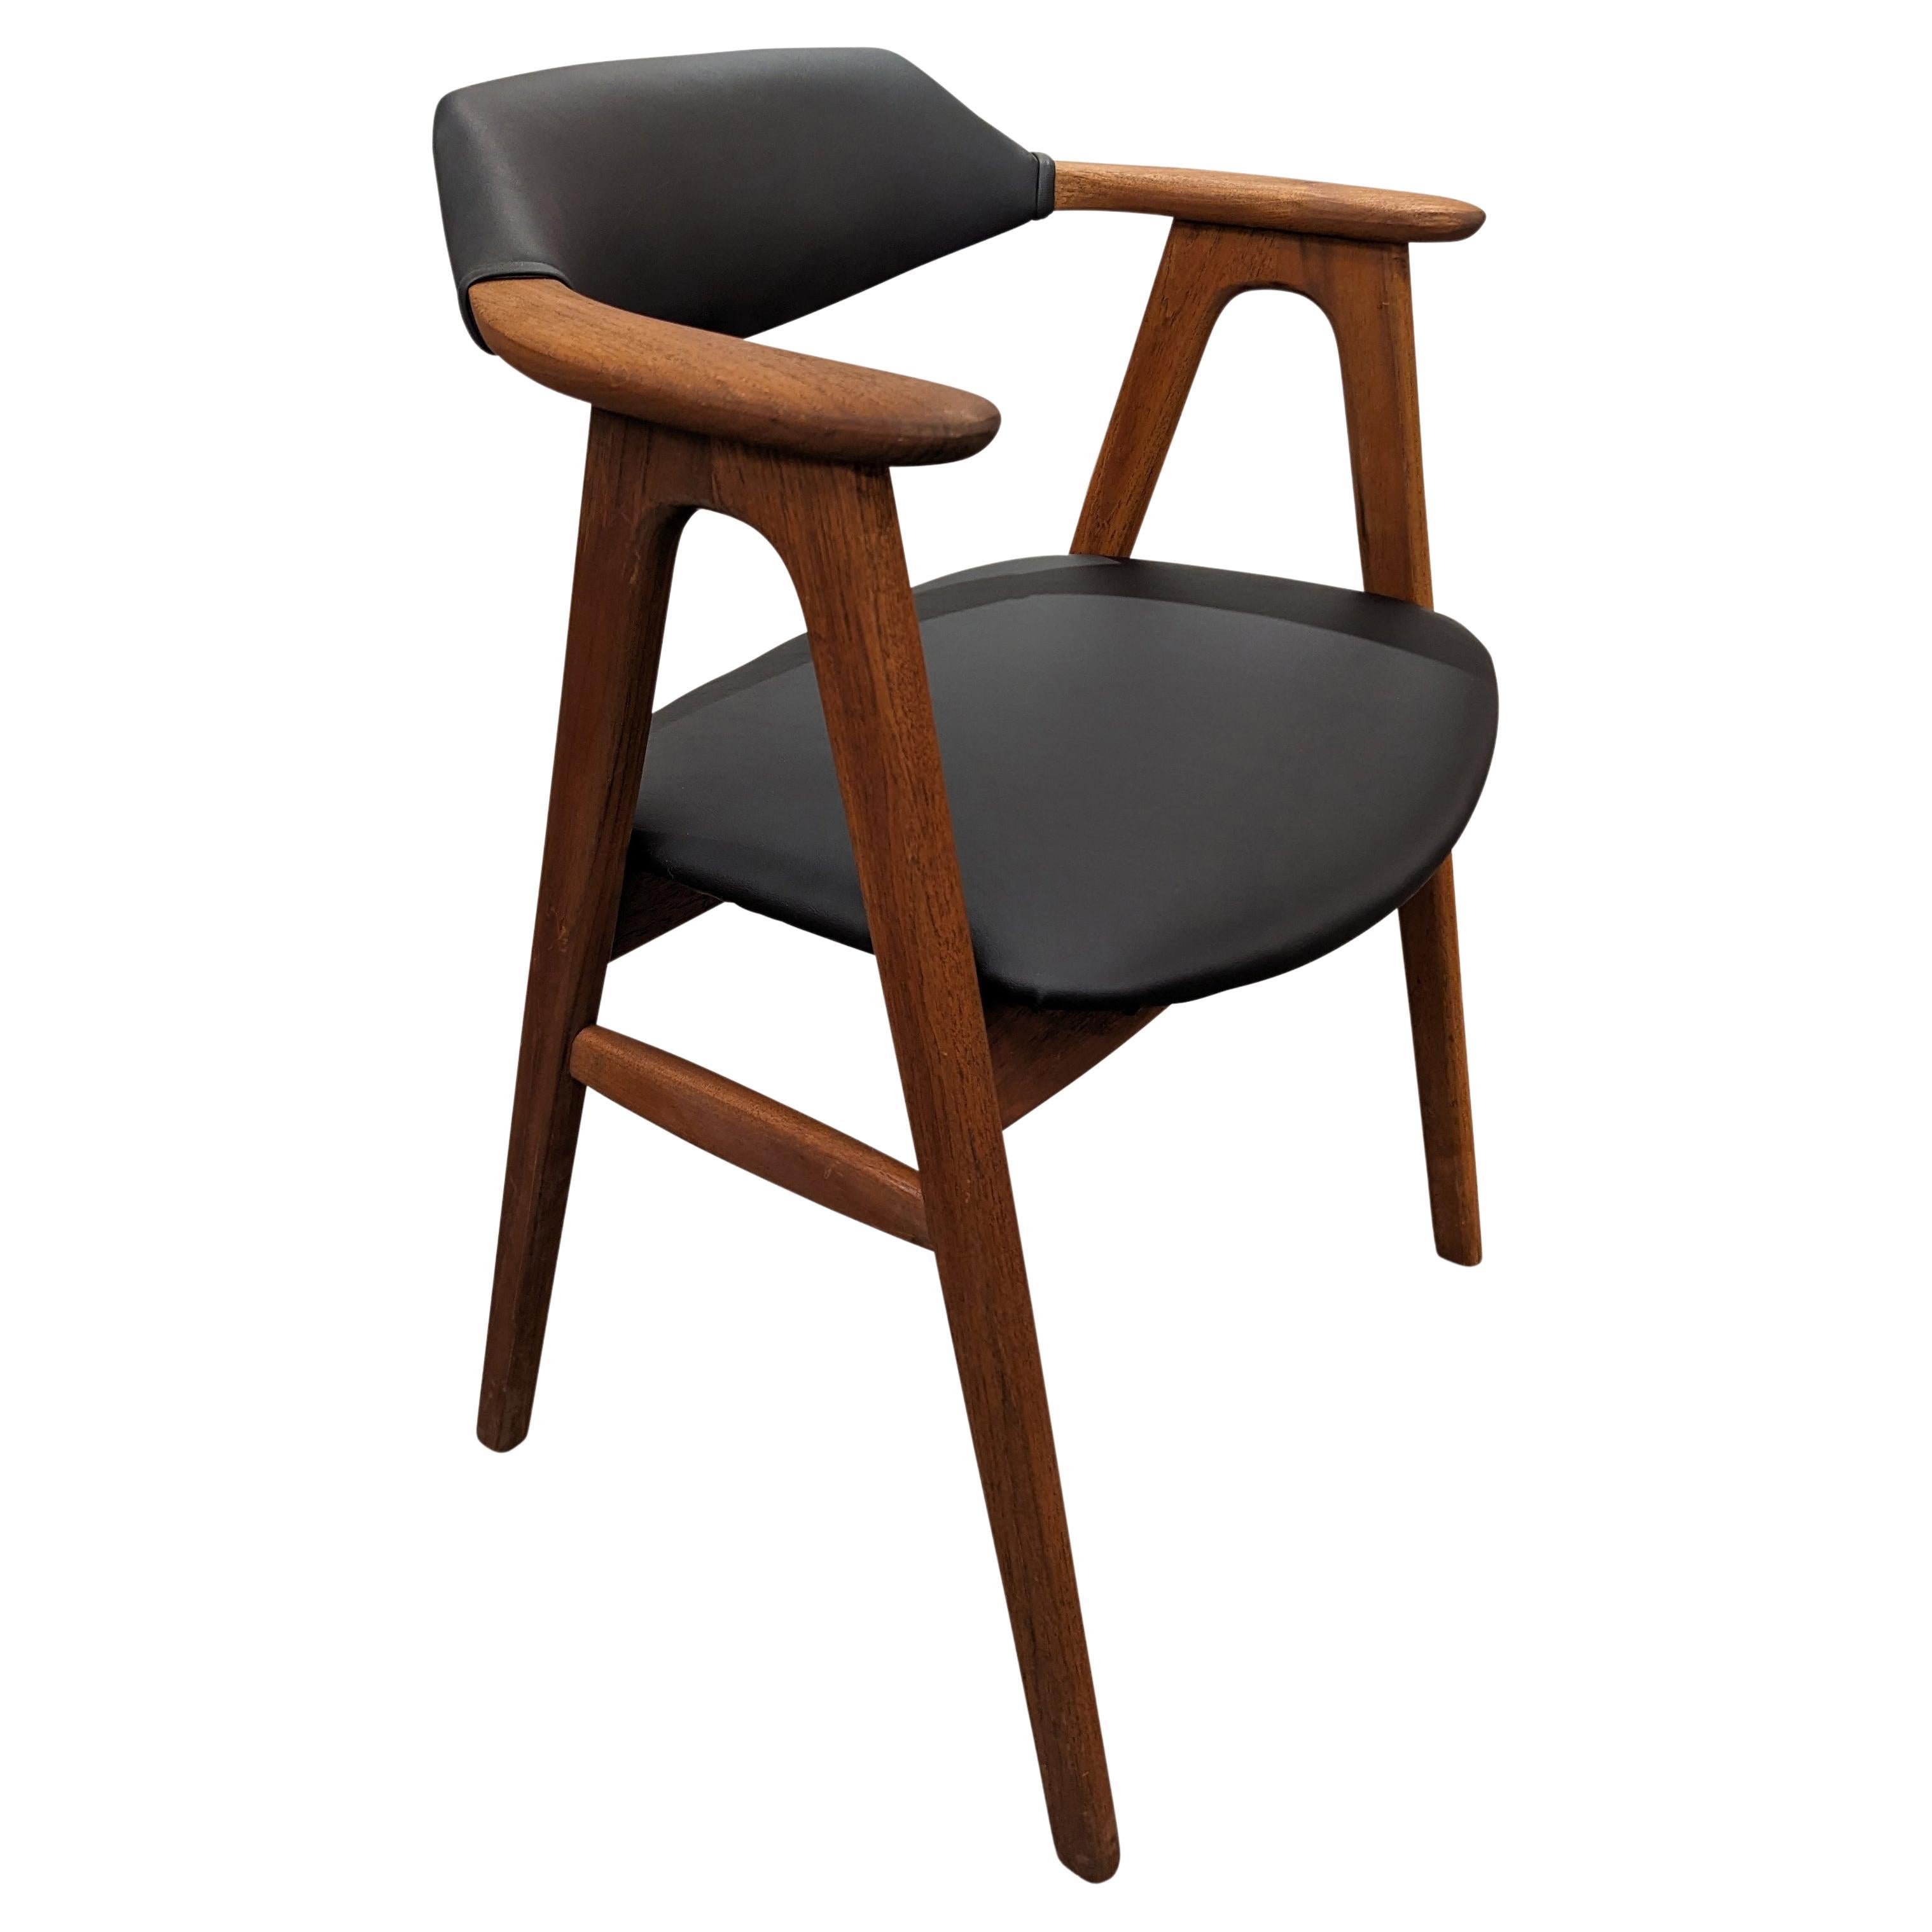  Vintage Danish Mid Century Erik Kirkegaard Arm Chair - 022430